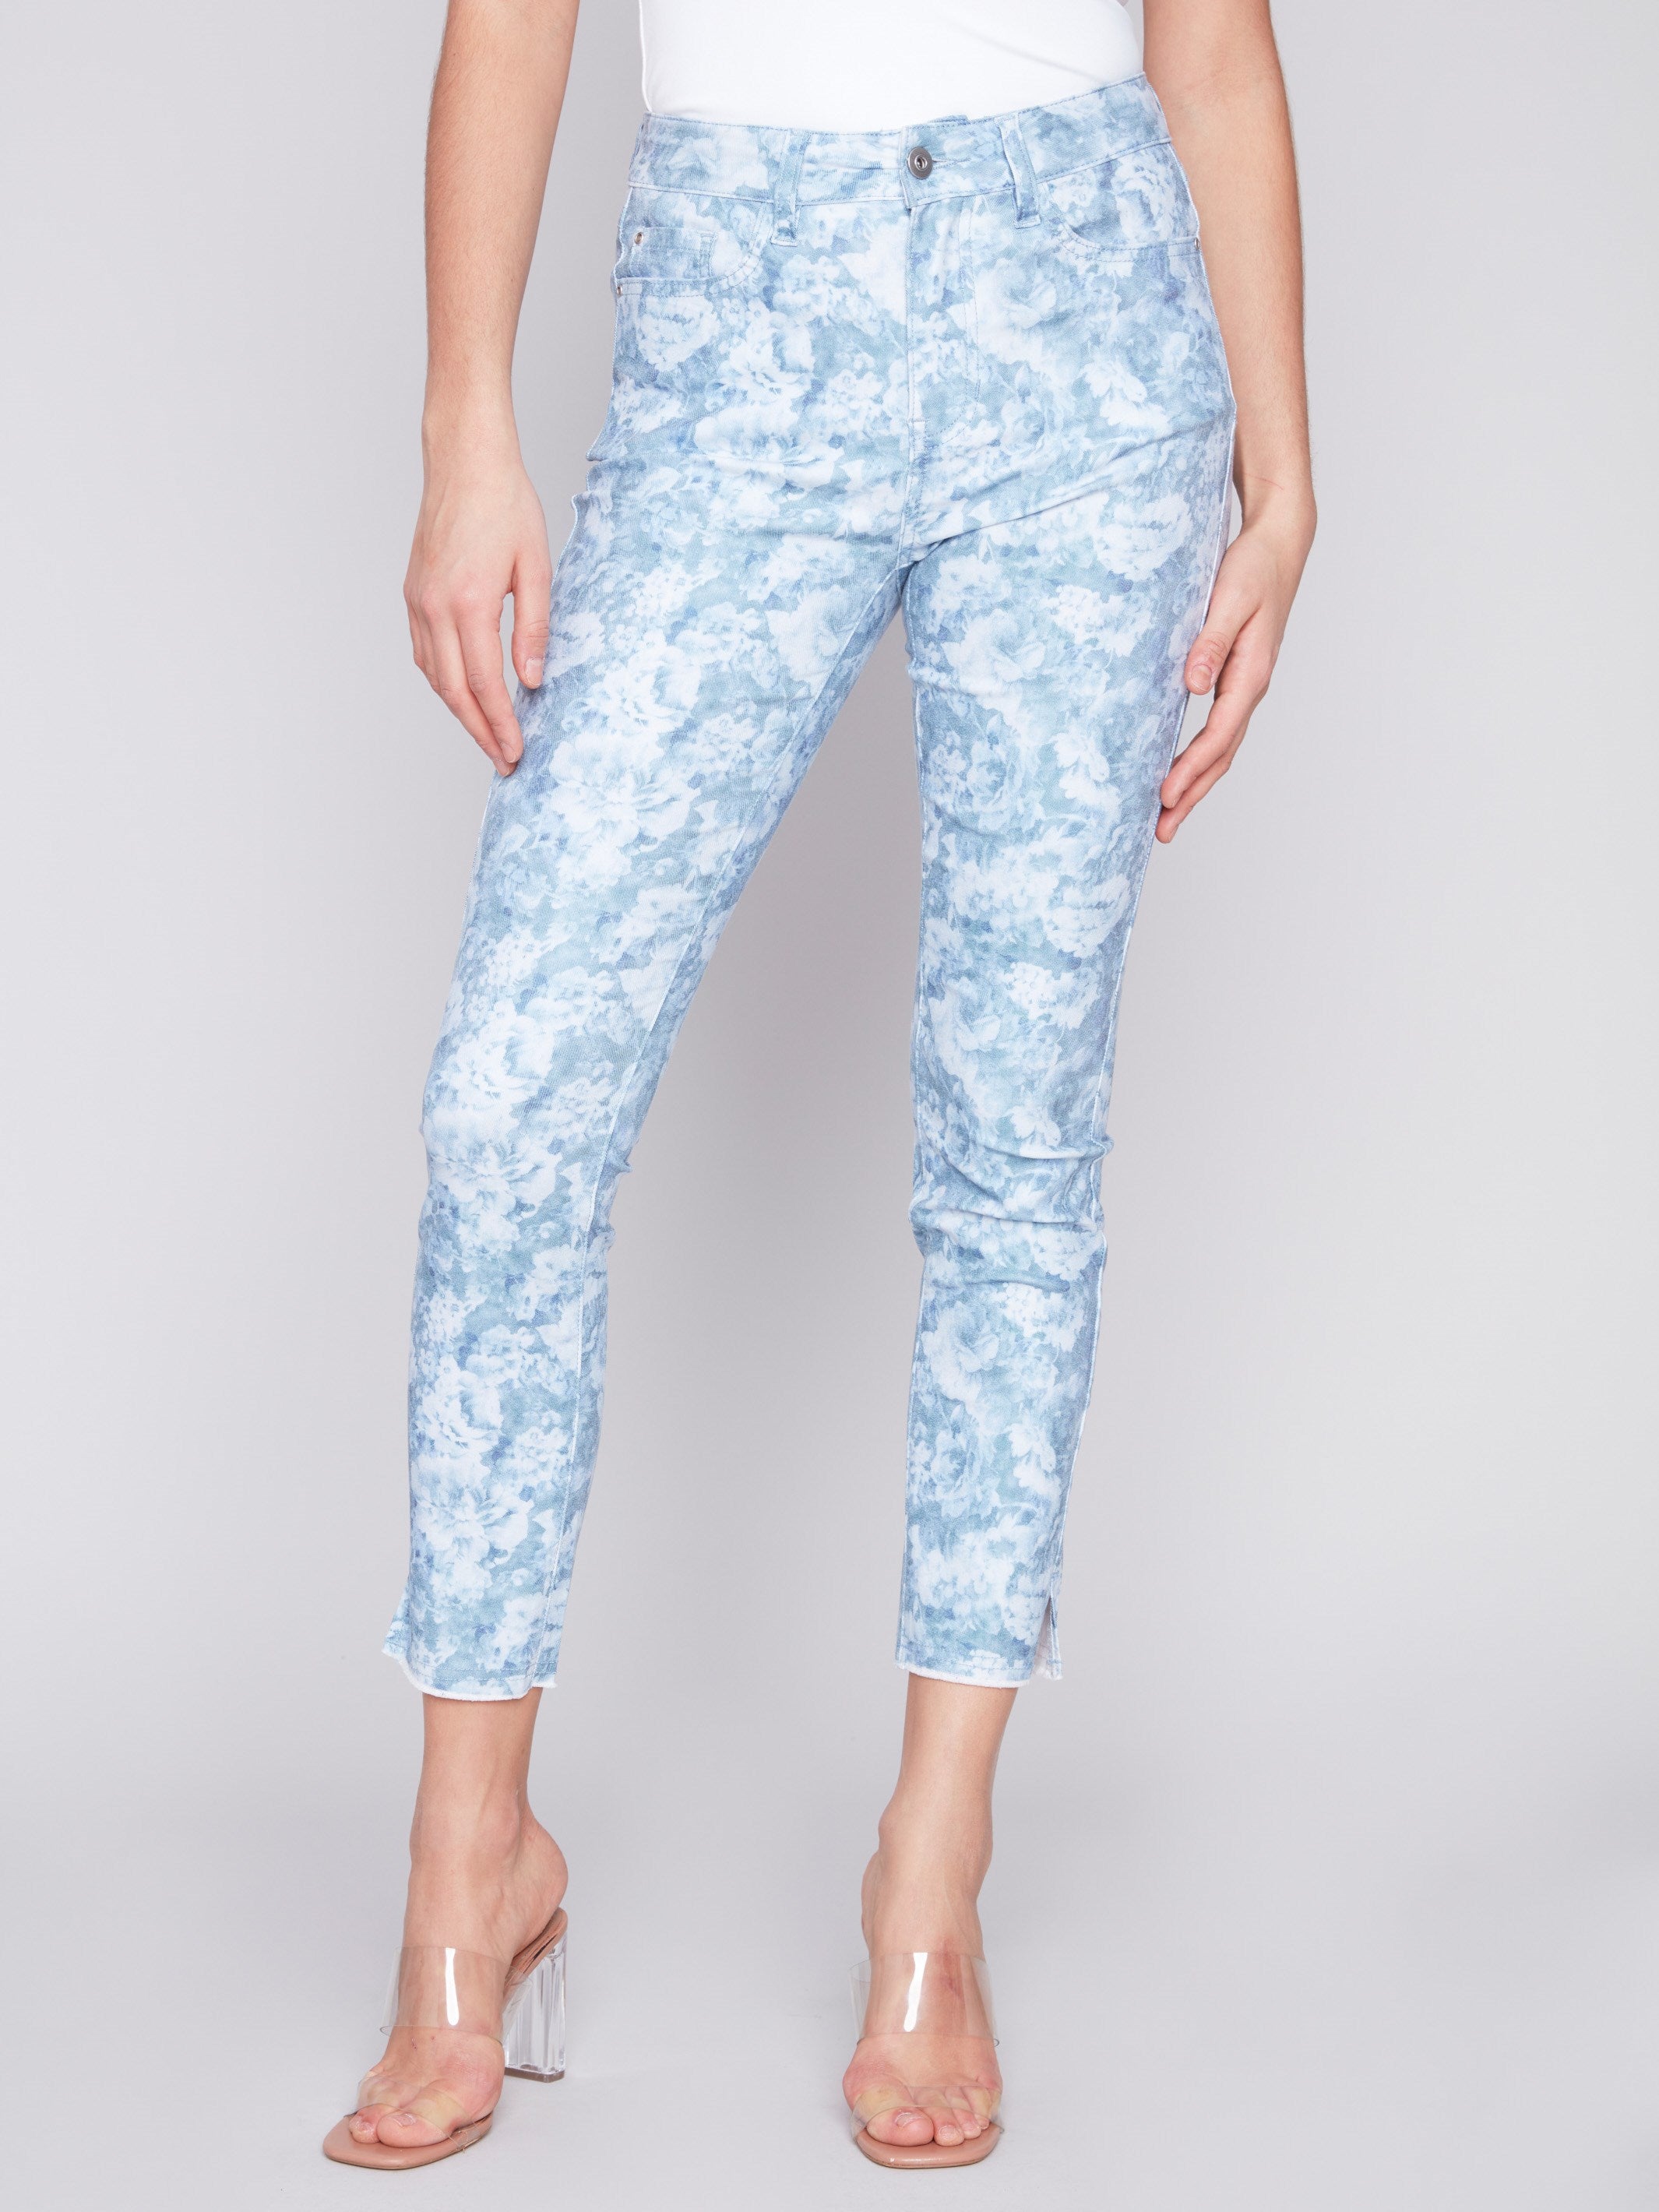 Charlie B Printed Twill Pants with Hem Slit - Blue Rose - Image 2